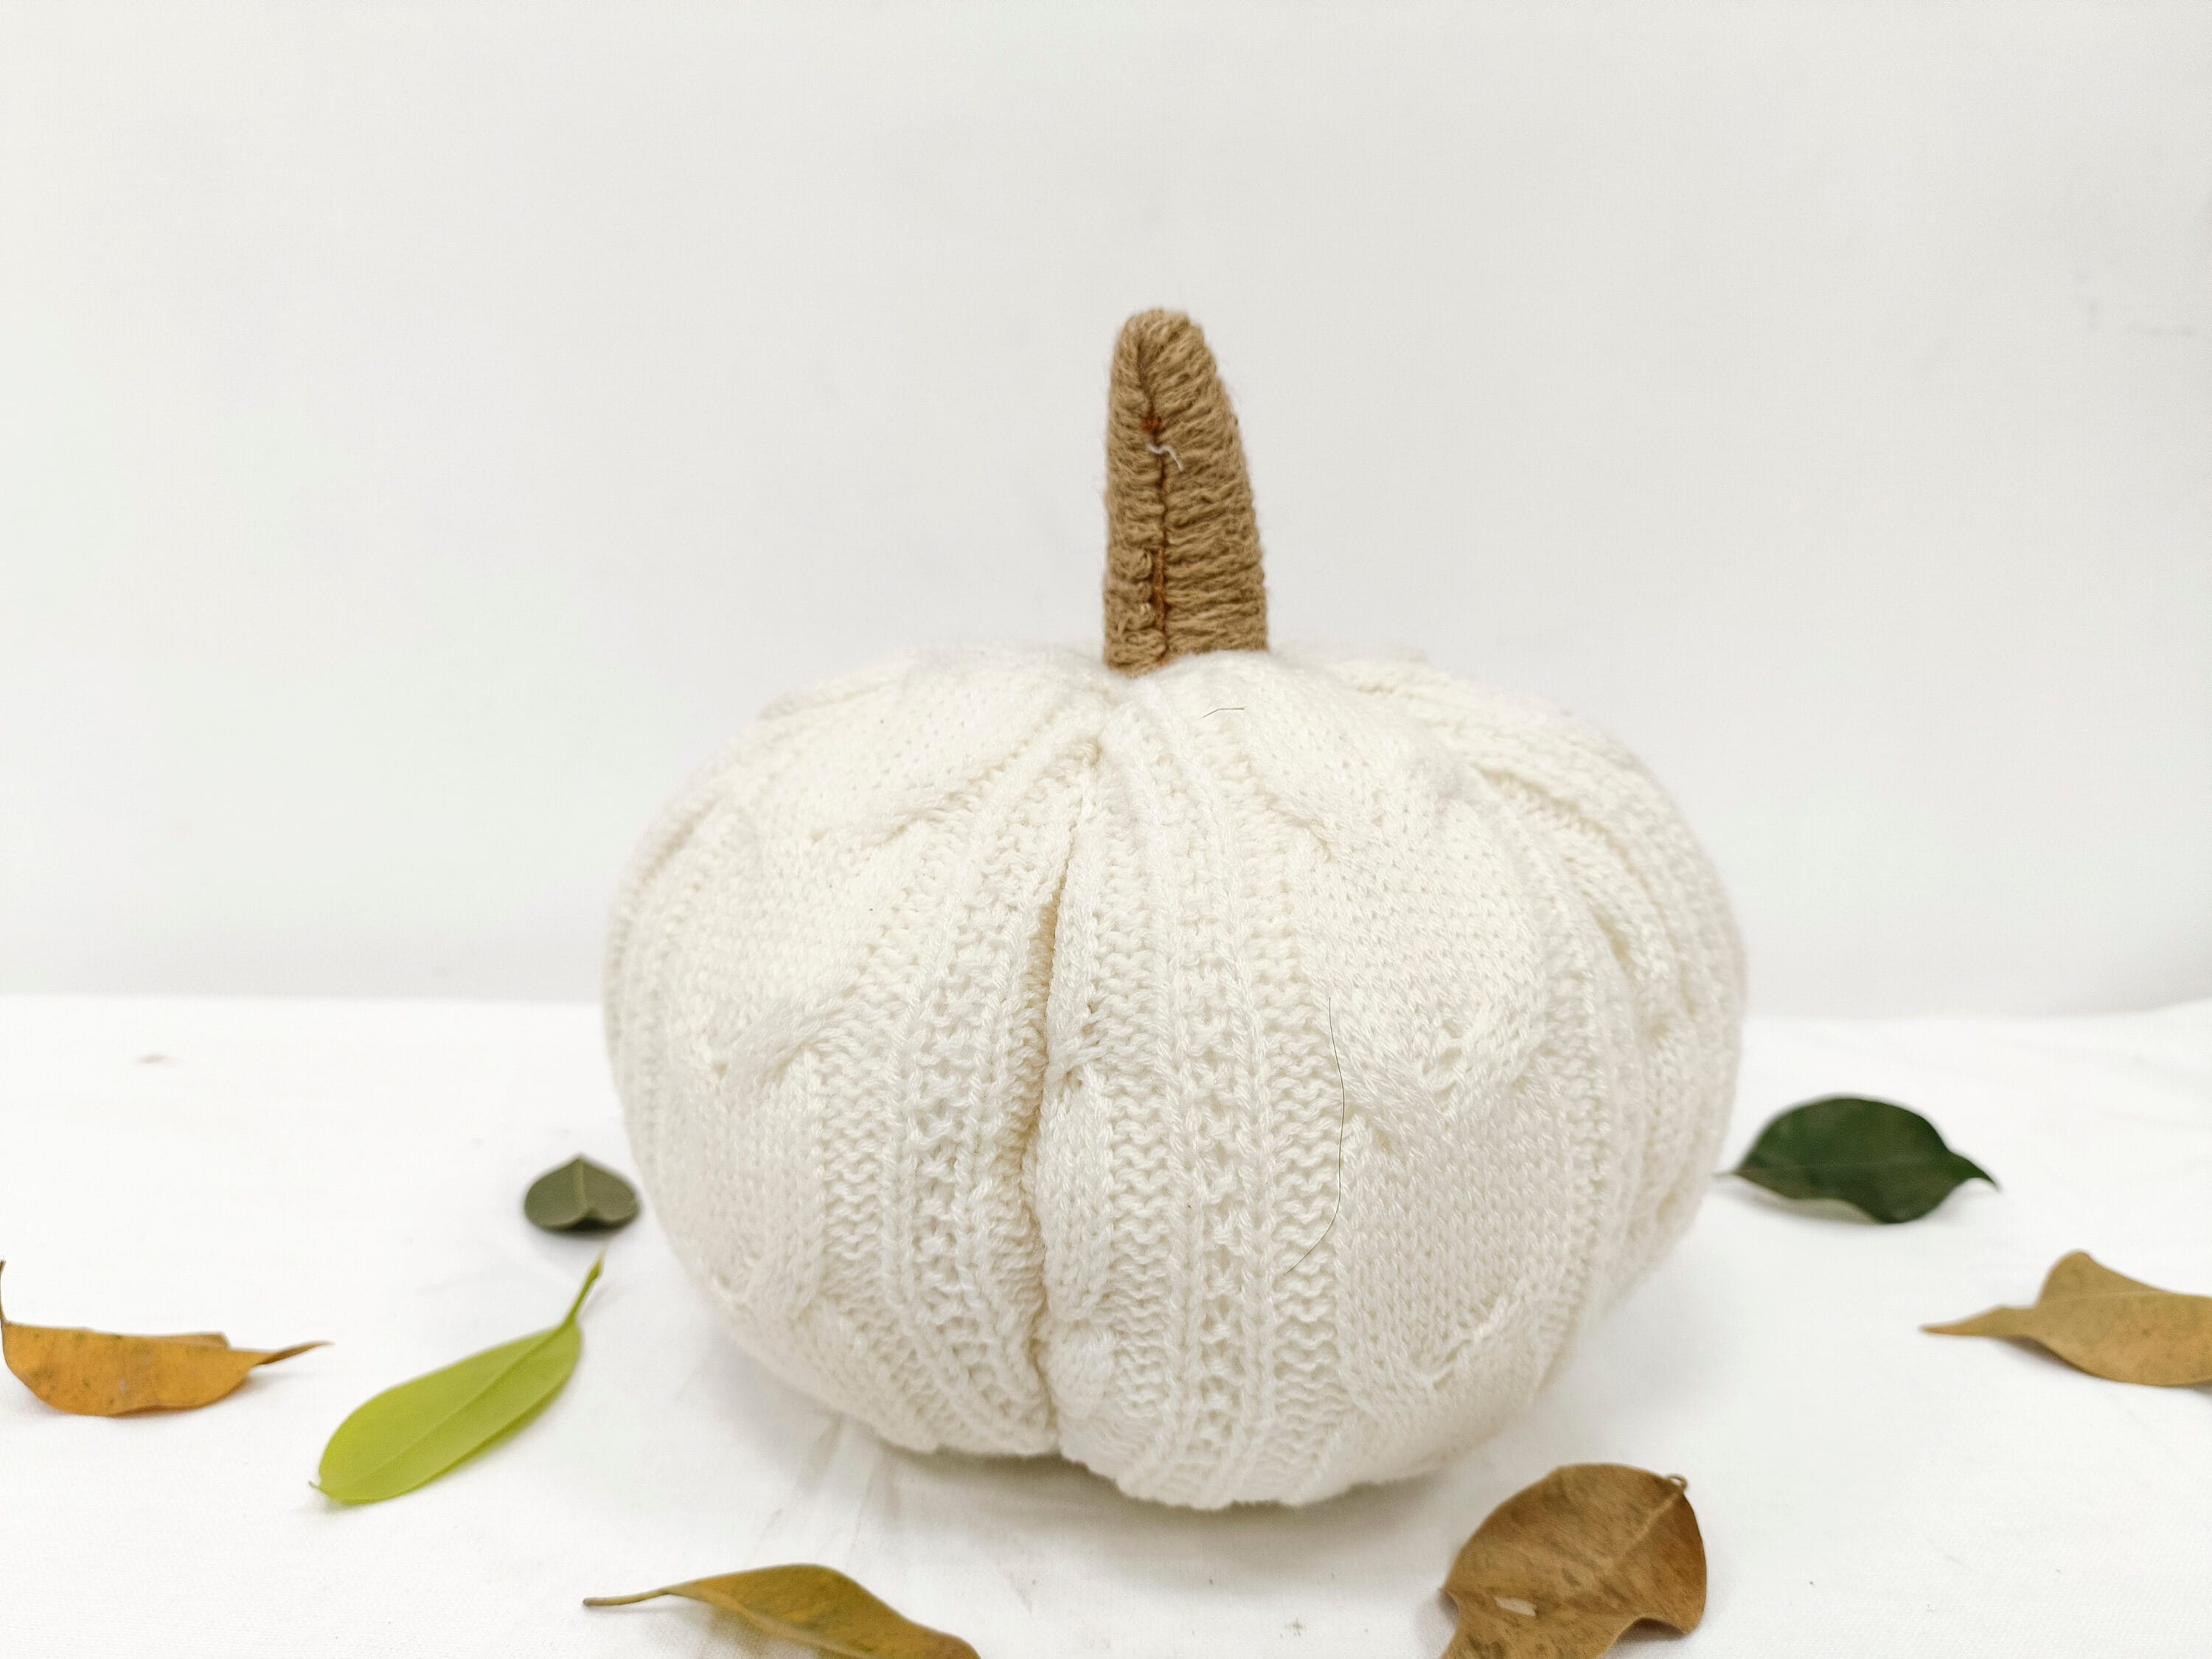 Glitzhome Fall Decor 18x18 Cotton Embroidered Pumpkin Pillow Cover, Indoor  Use, White, Hidden Zipper